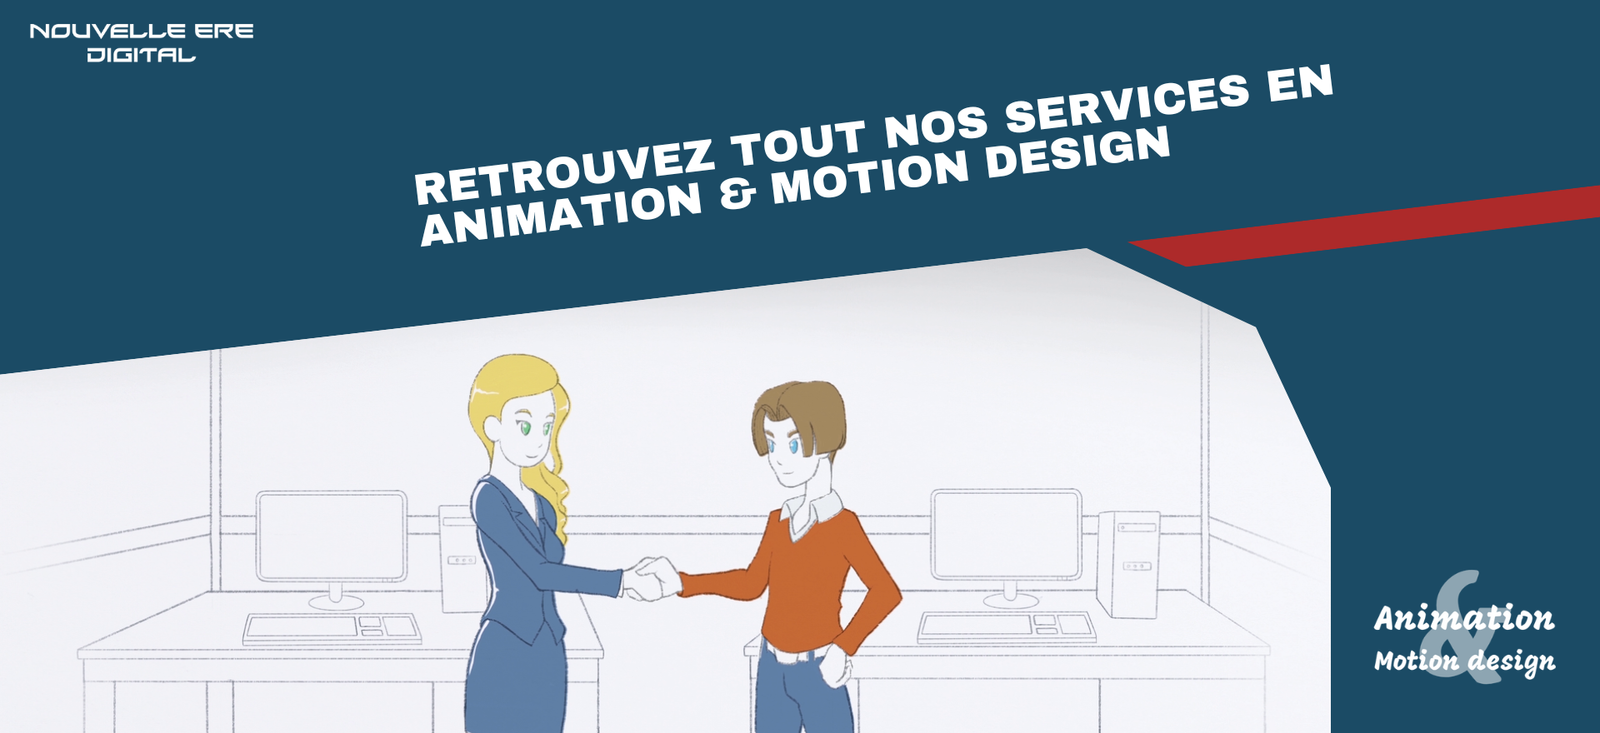 animation & motion design